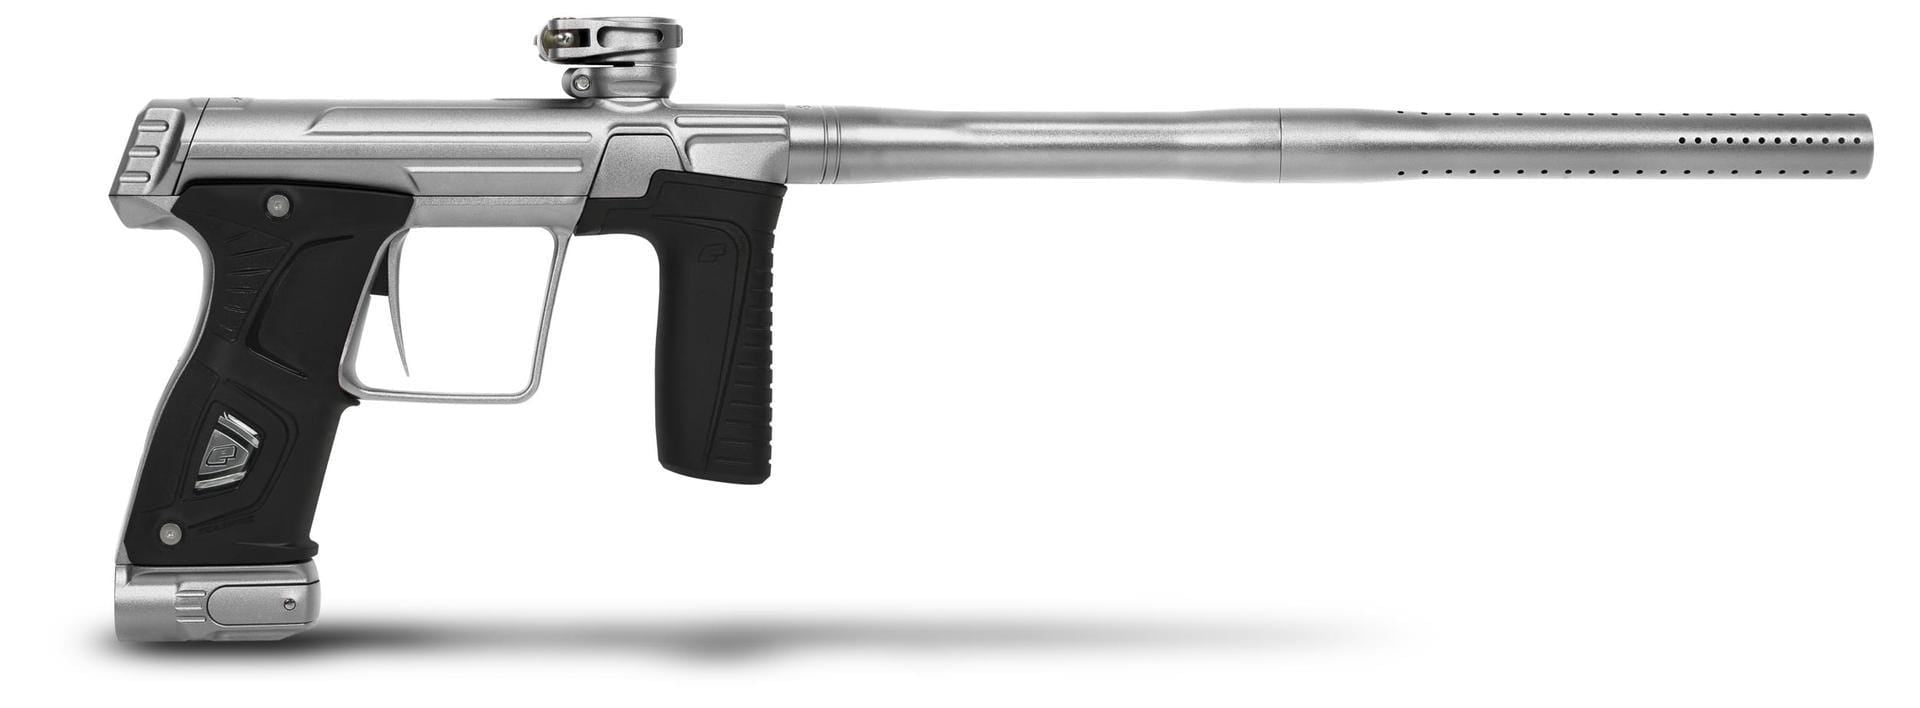 PLANET ECLIPSE GTEK 170R PAINTBALL GUN - SILVER - Eminent Paintball And Airsoft